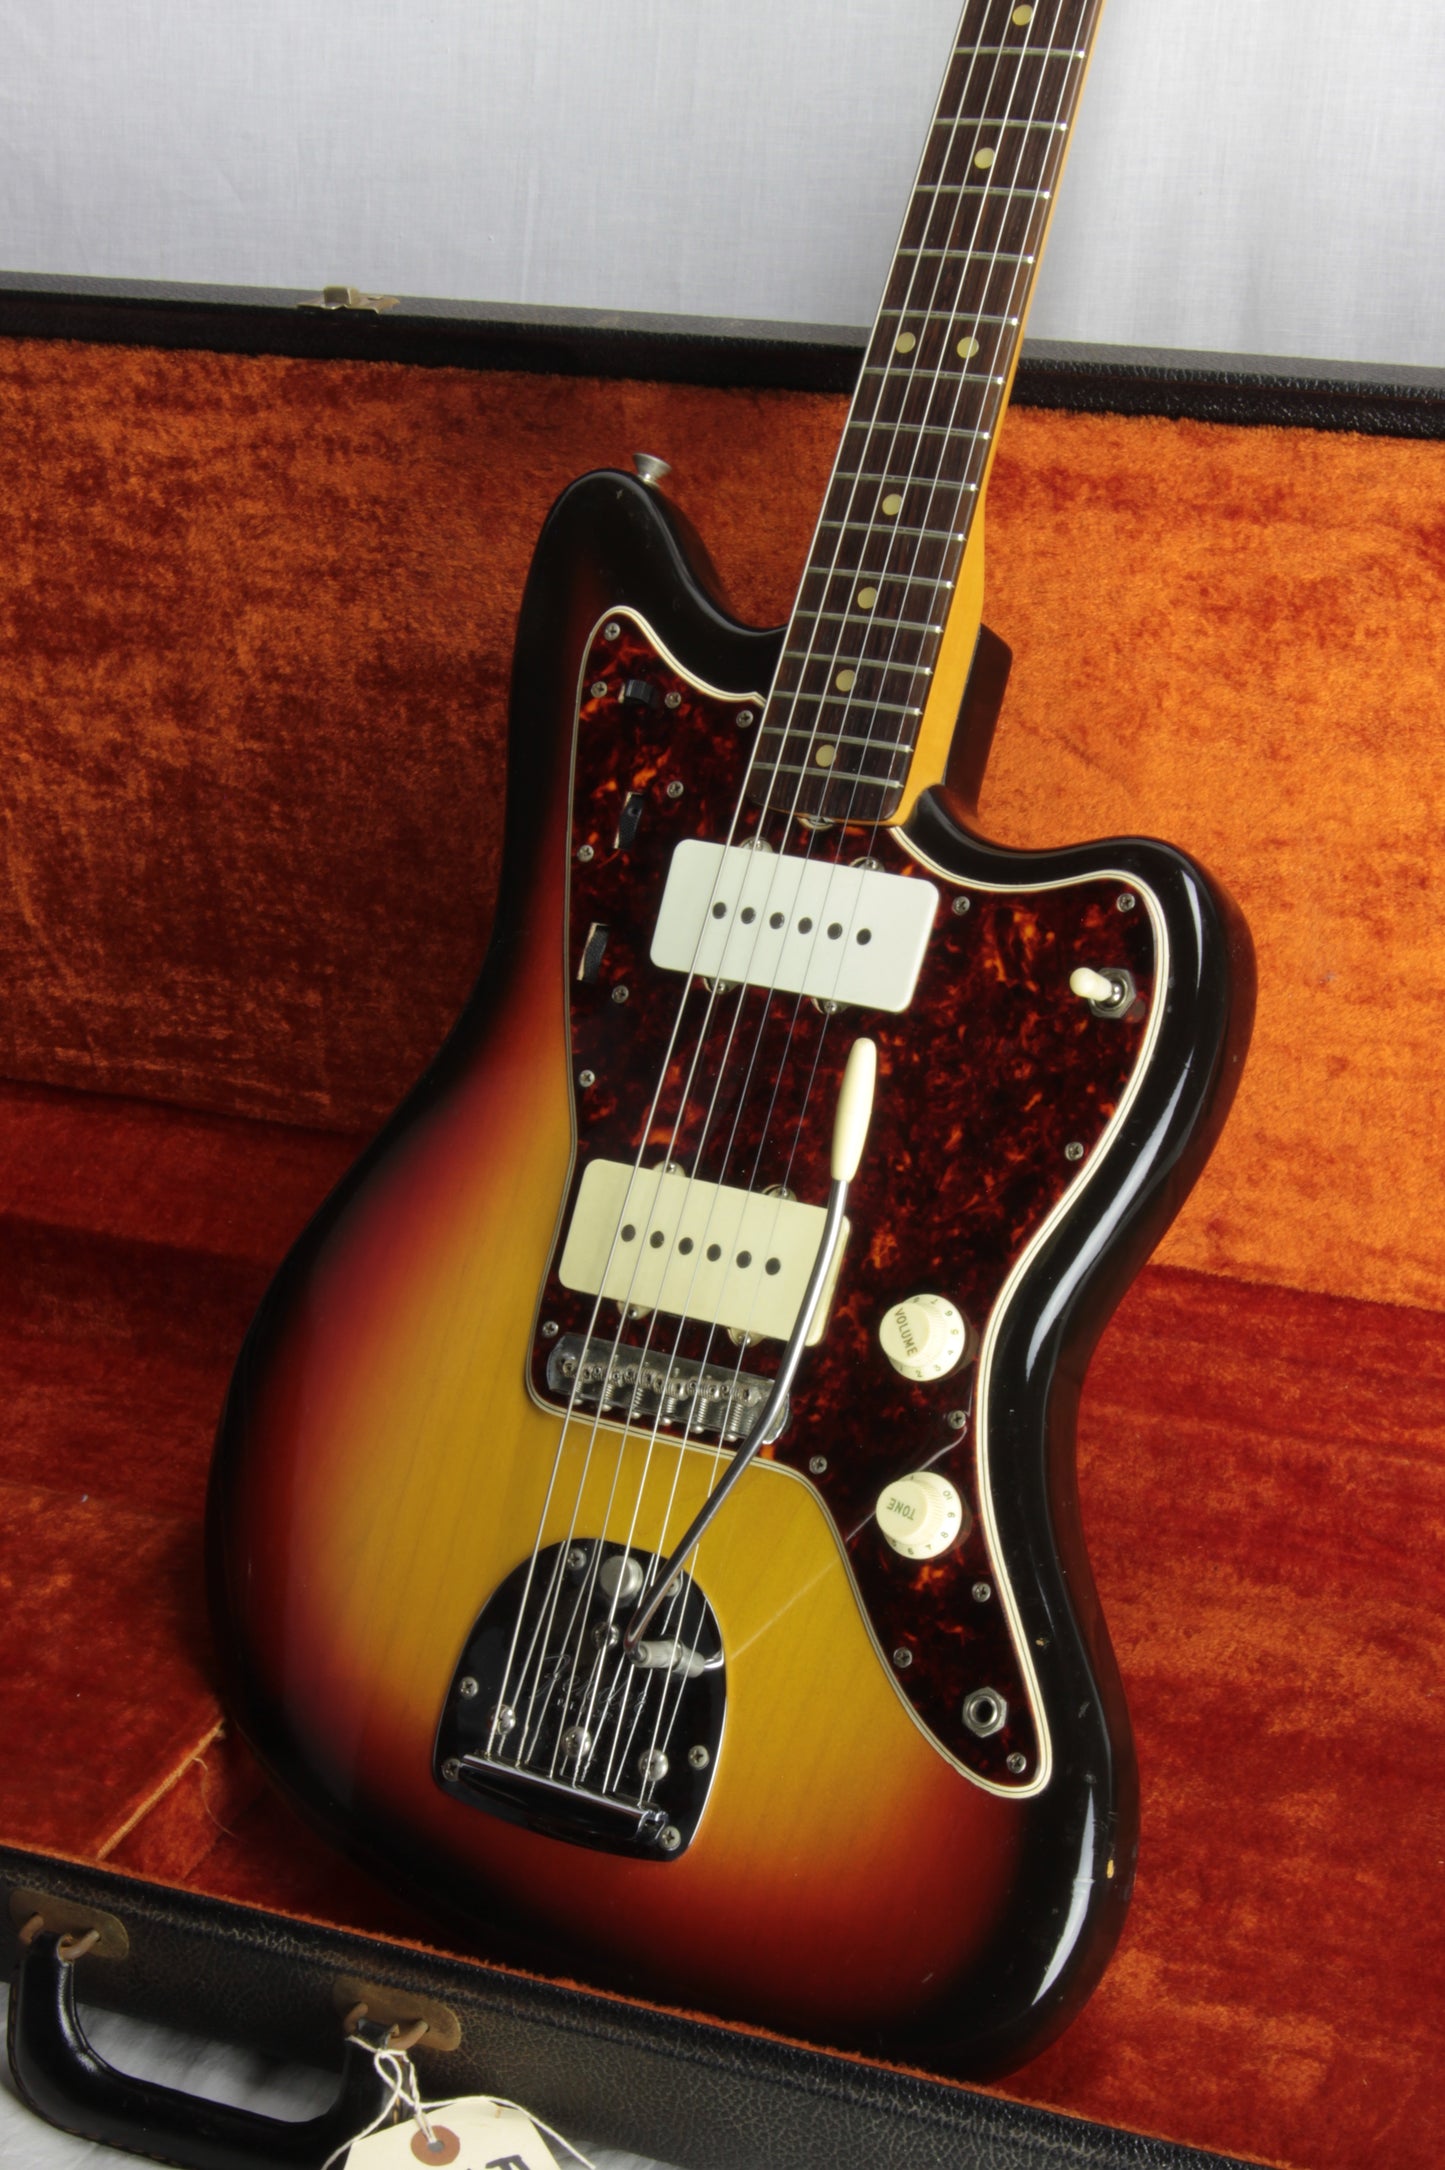 1965 Fender Jazzmaster Sunburst! L-Series Offset! jaguar stratocaster scale Pre-CBS